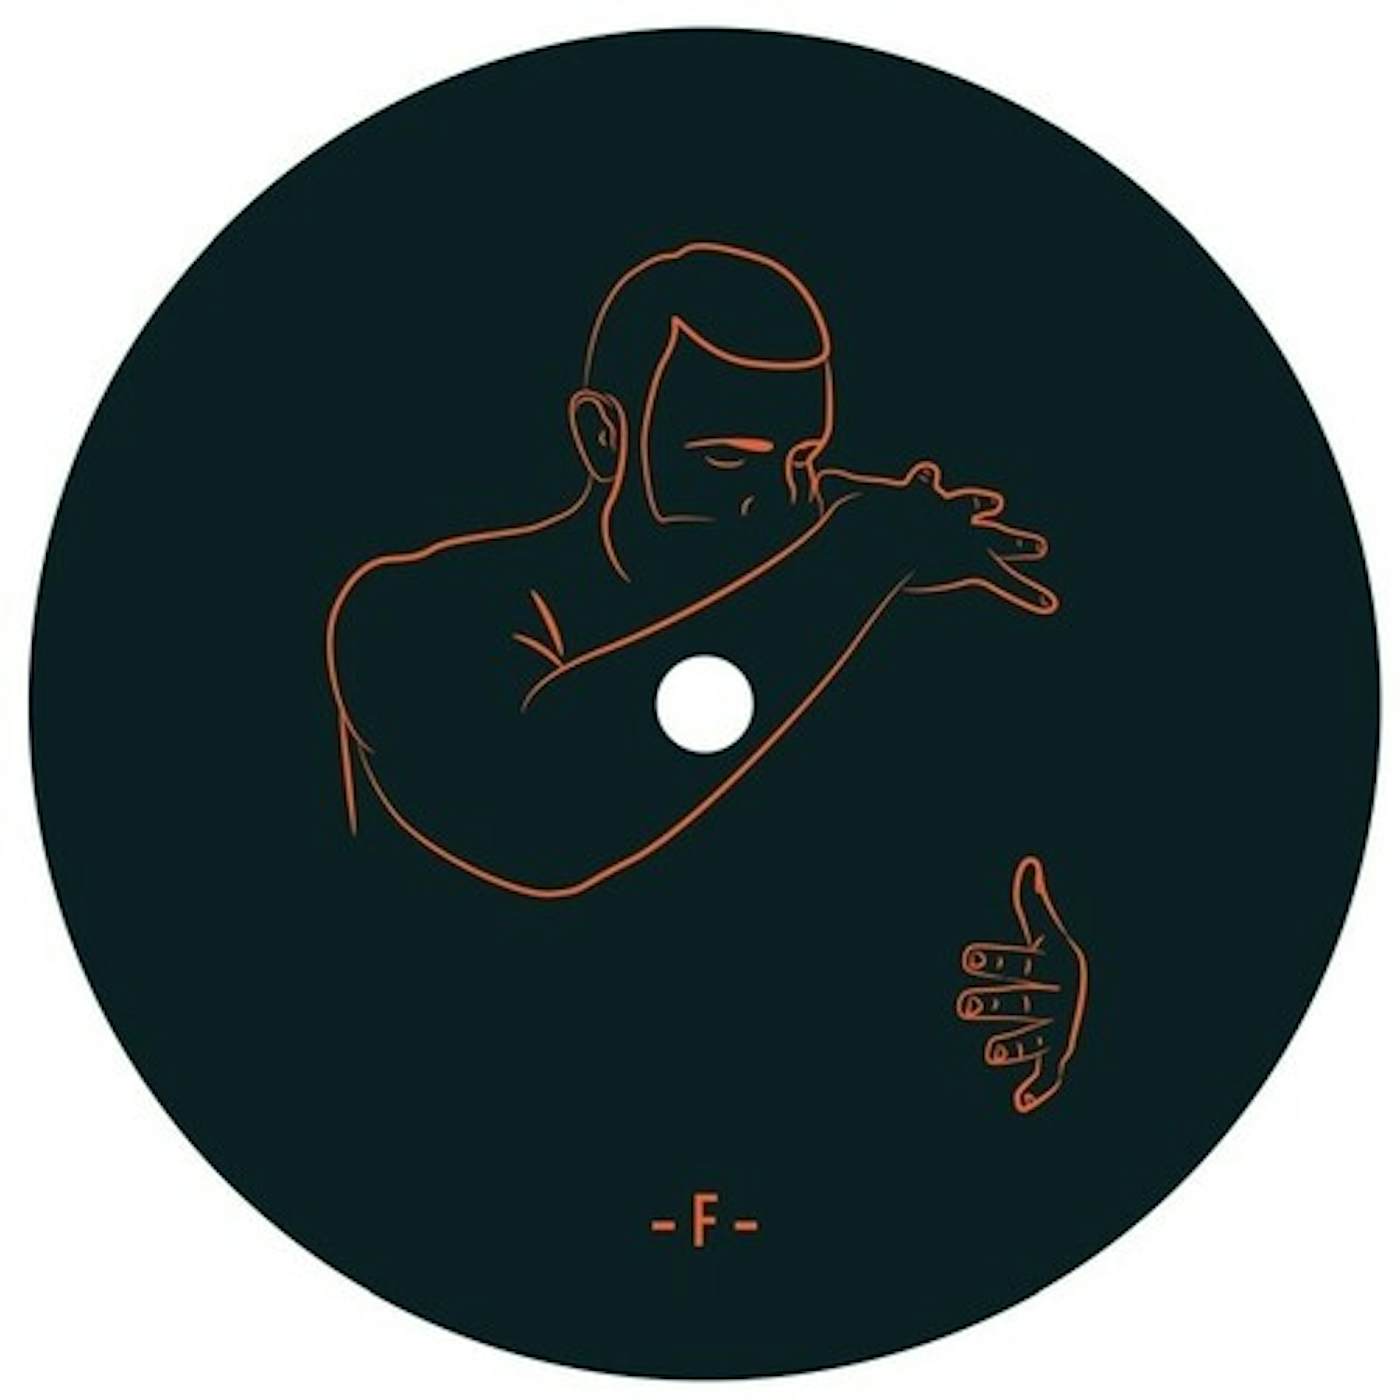 Ketiov F / G Vinyl Record